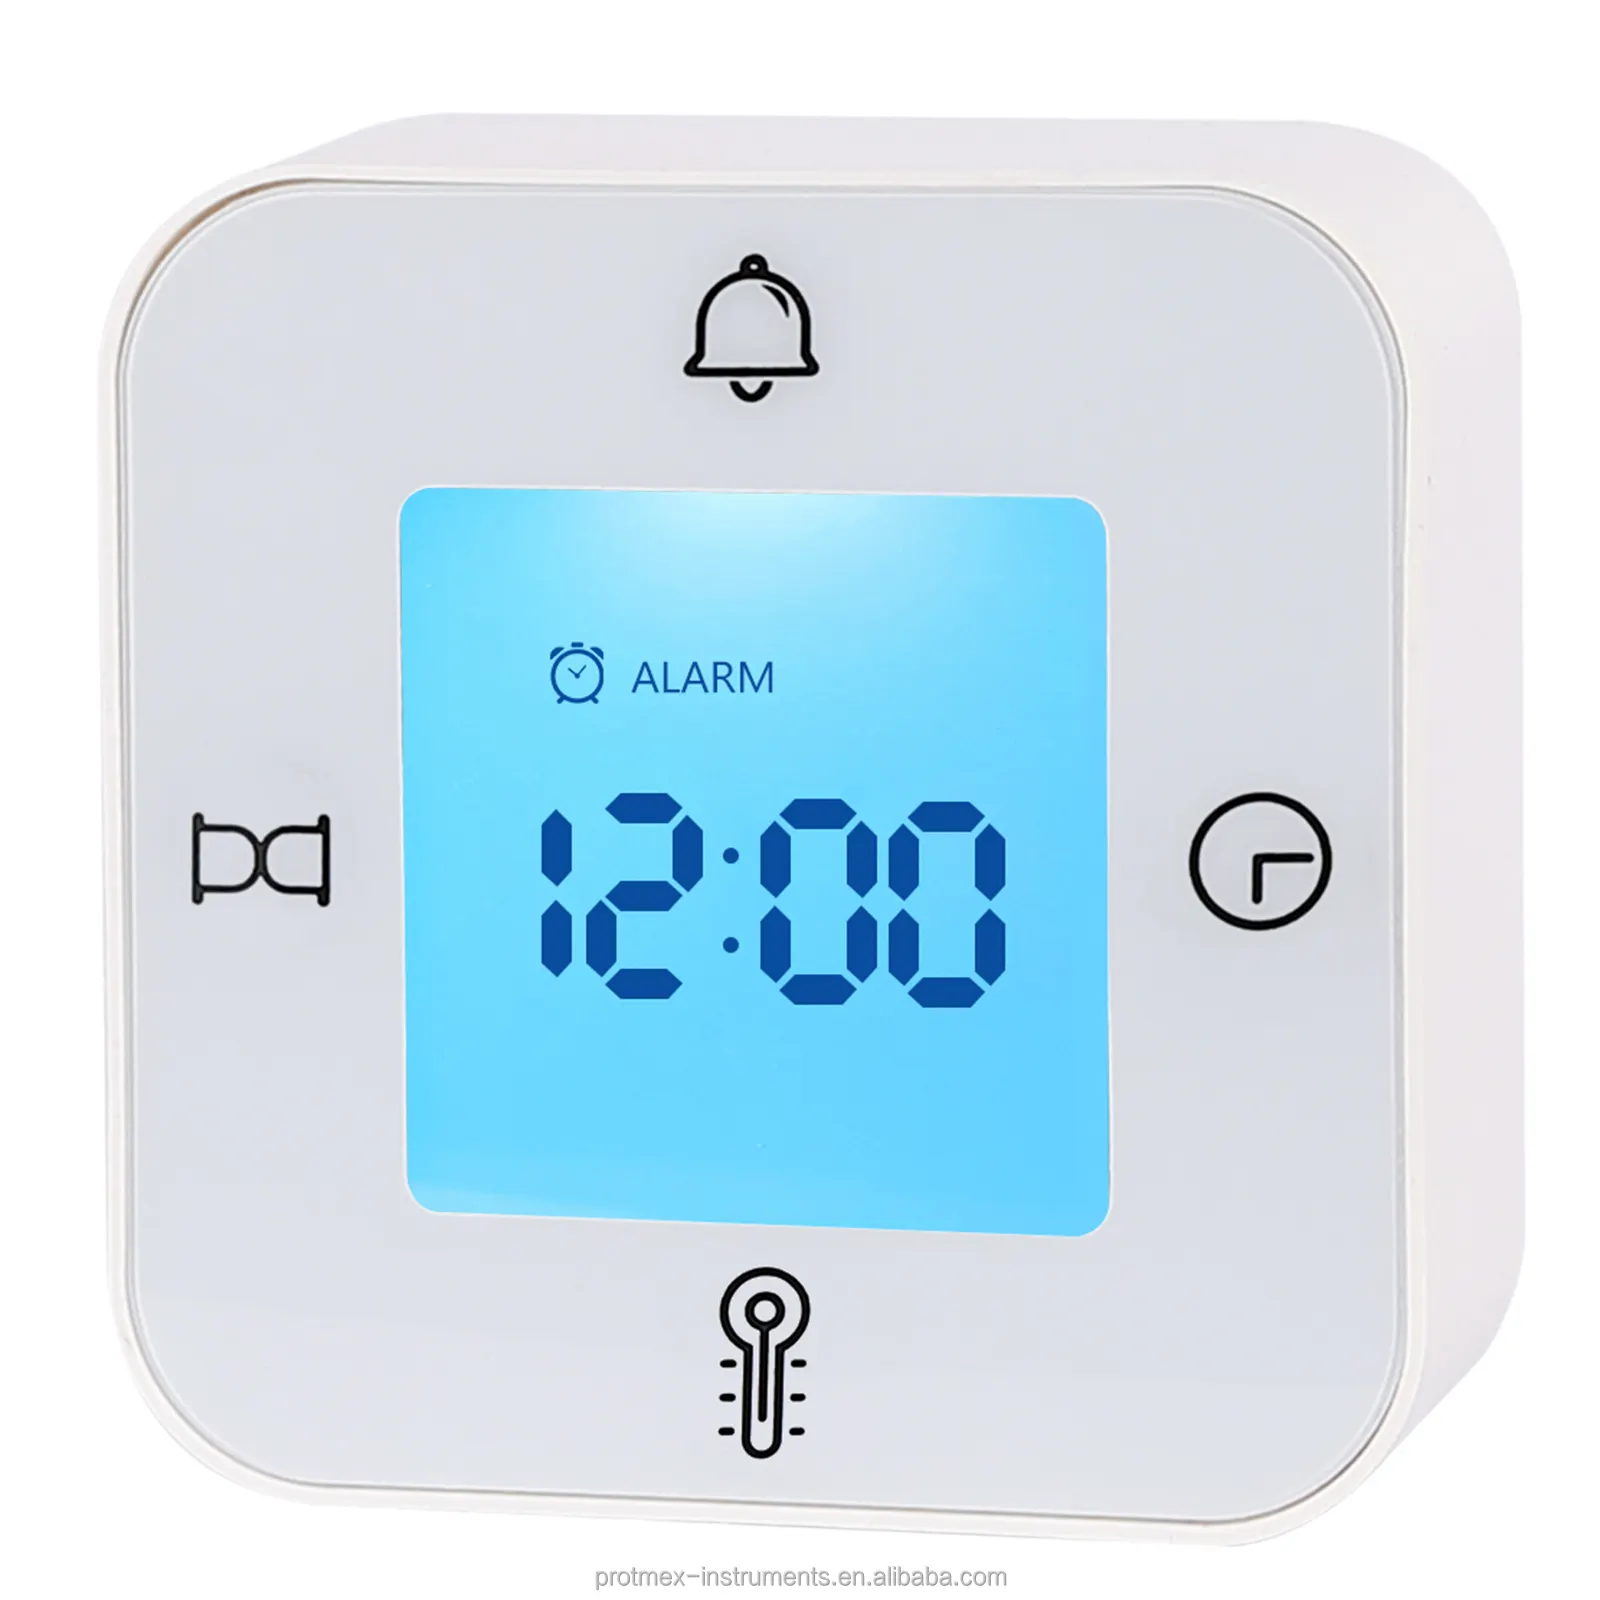 Promotional Multifunction Alarm Clock Digital Timer temperature calendar Desktop Alarm Clock